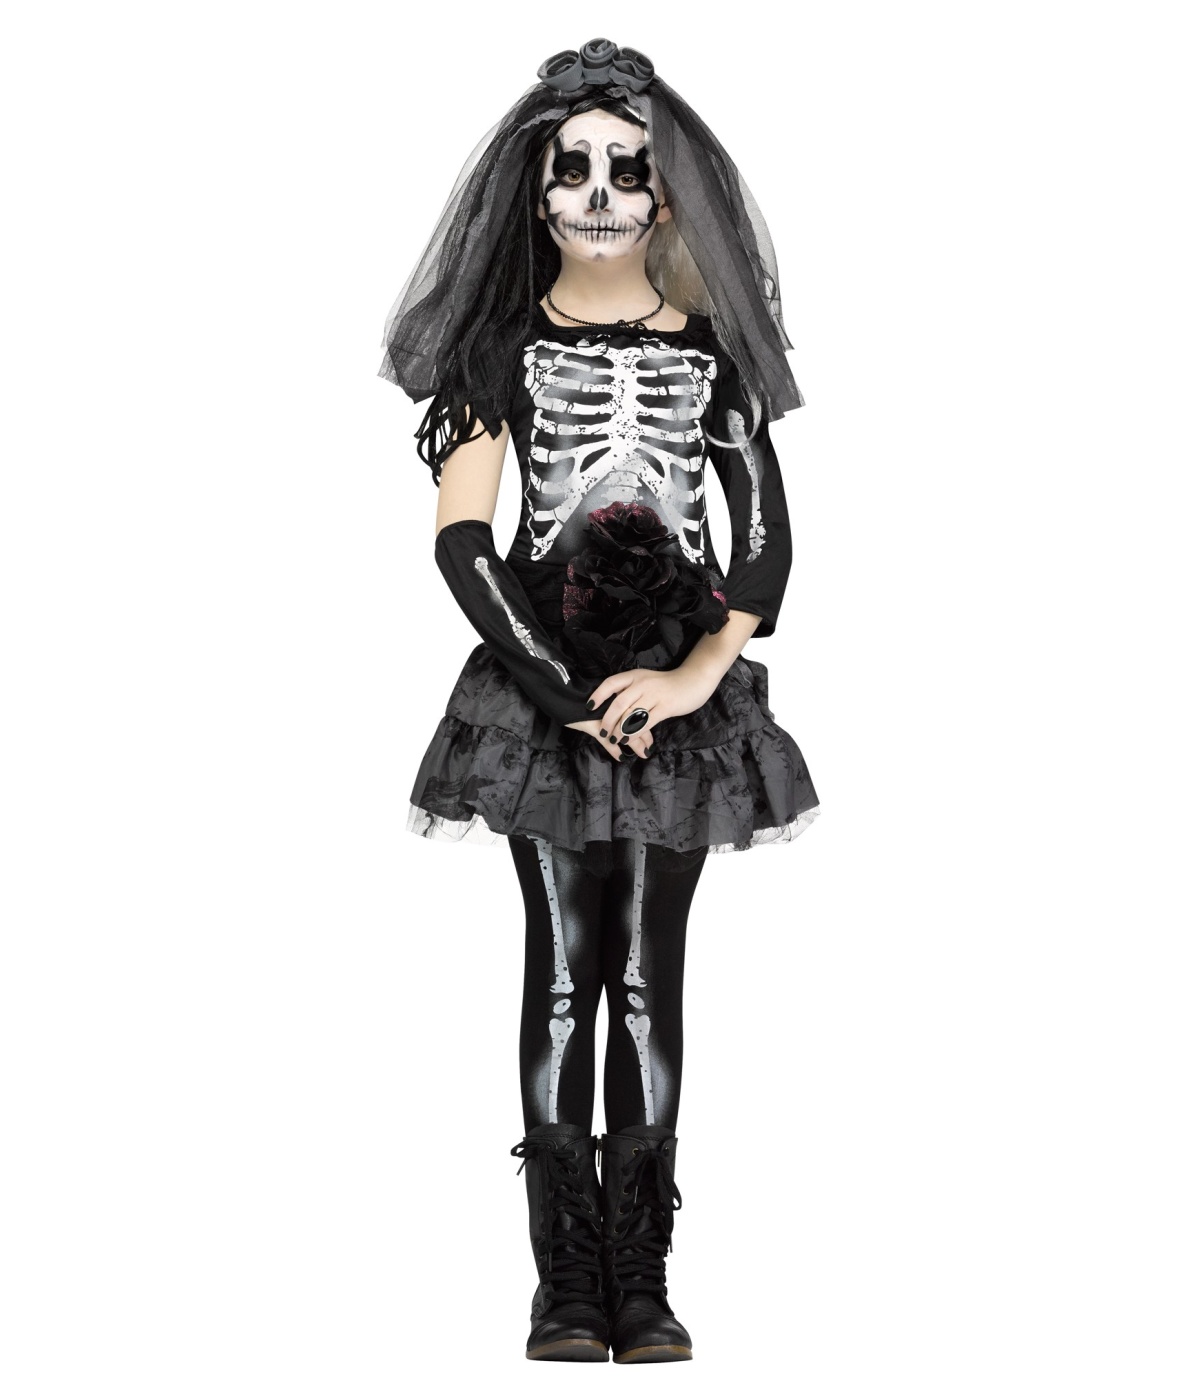  Girls Ghastly Skeleton Bride Costume